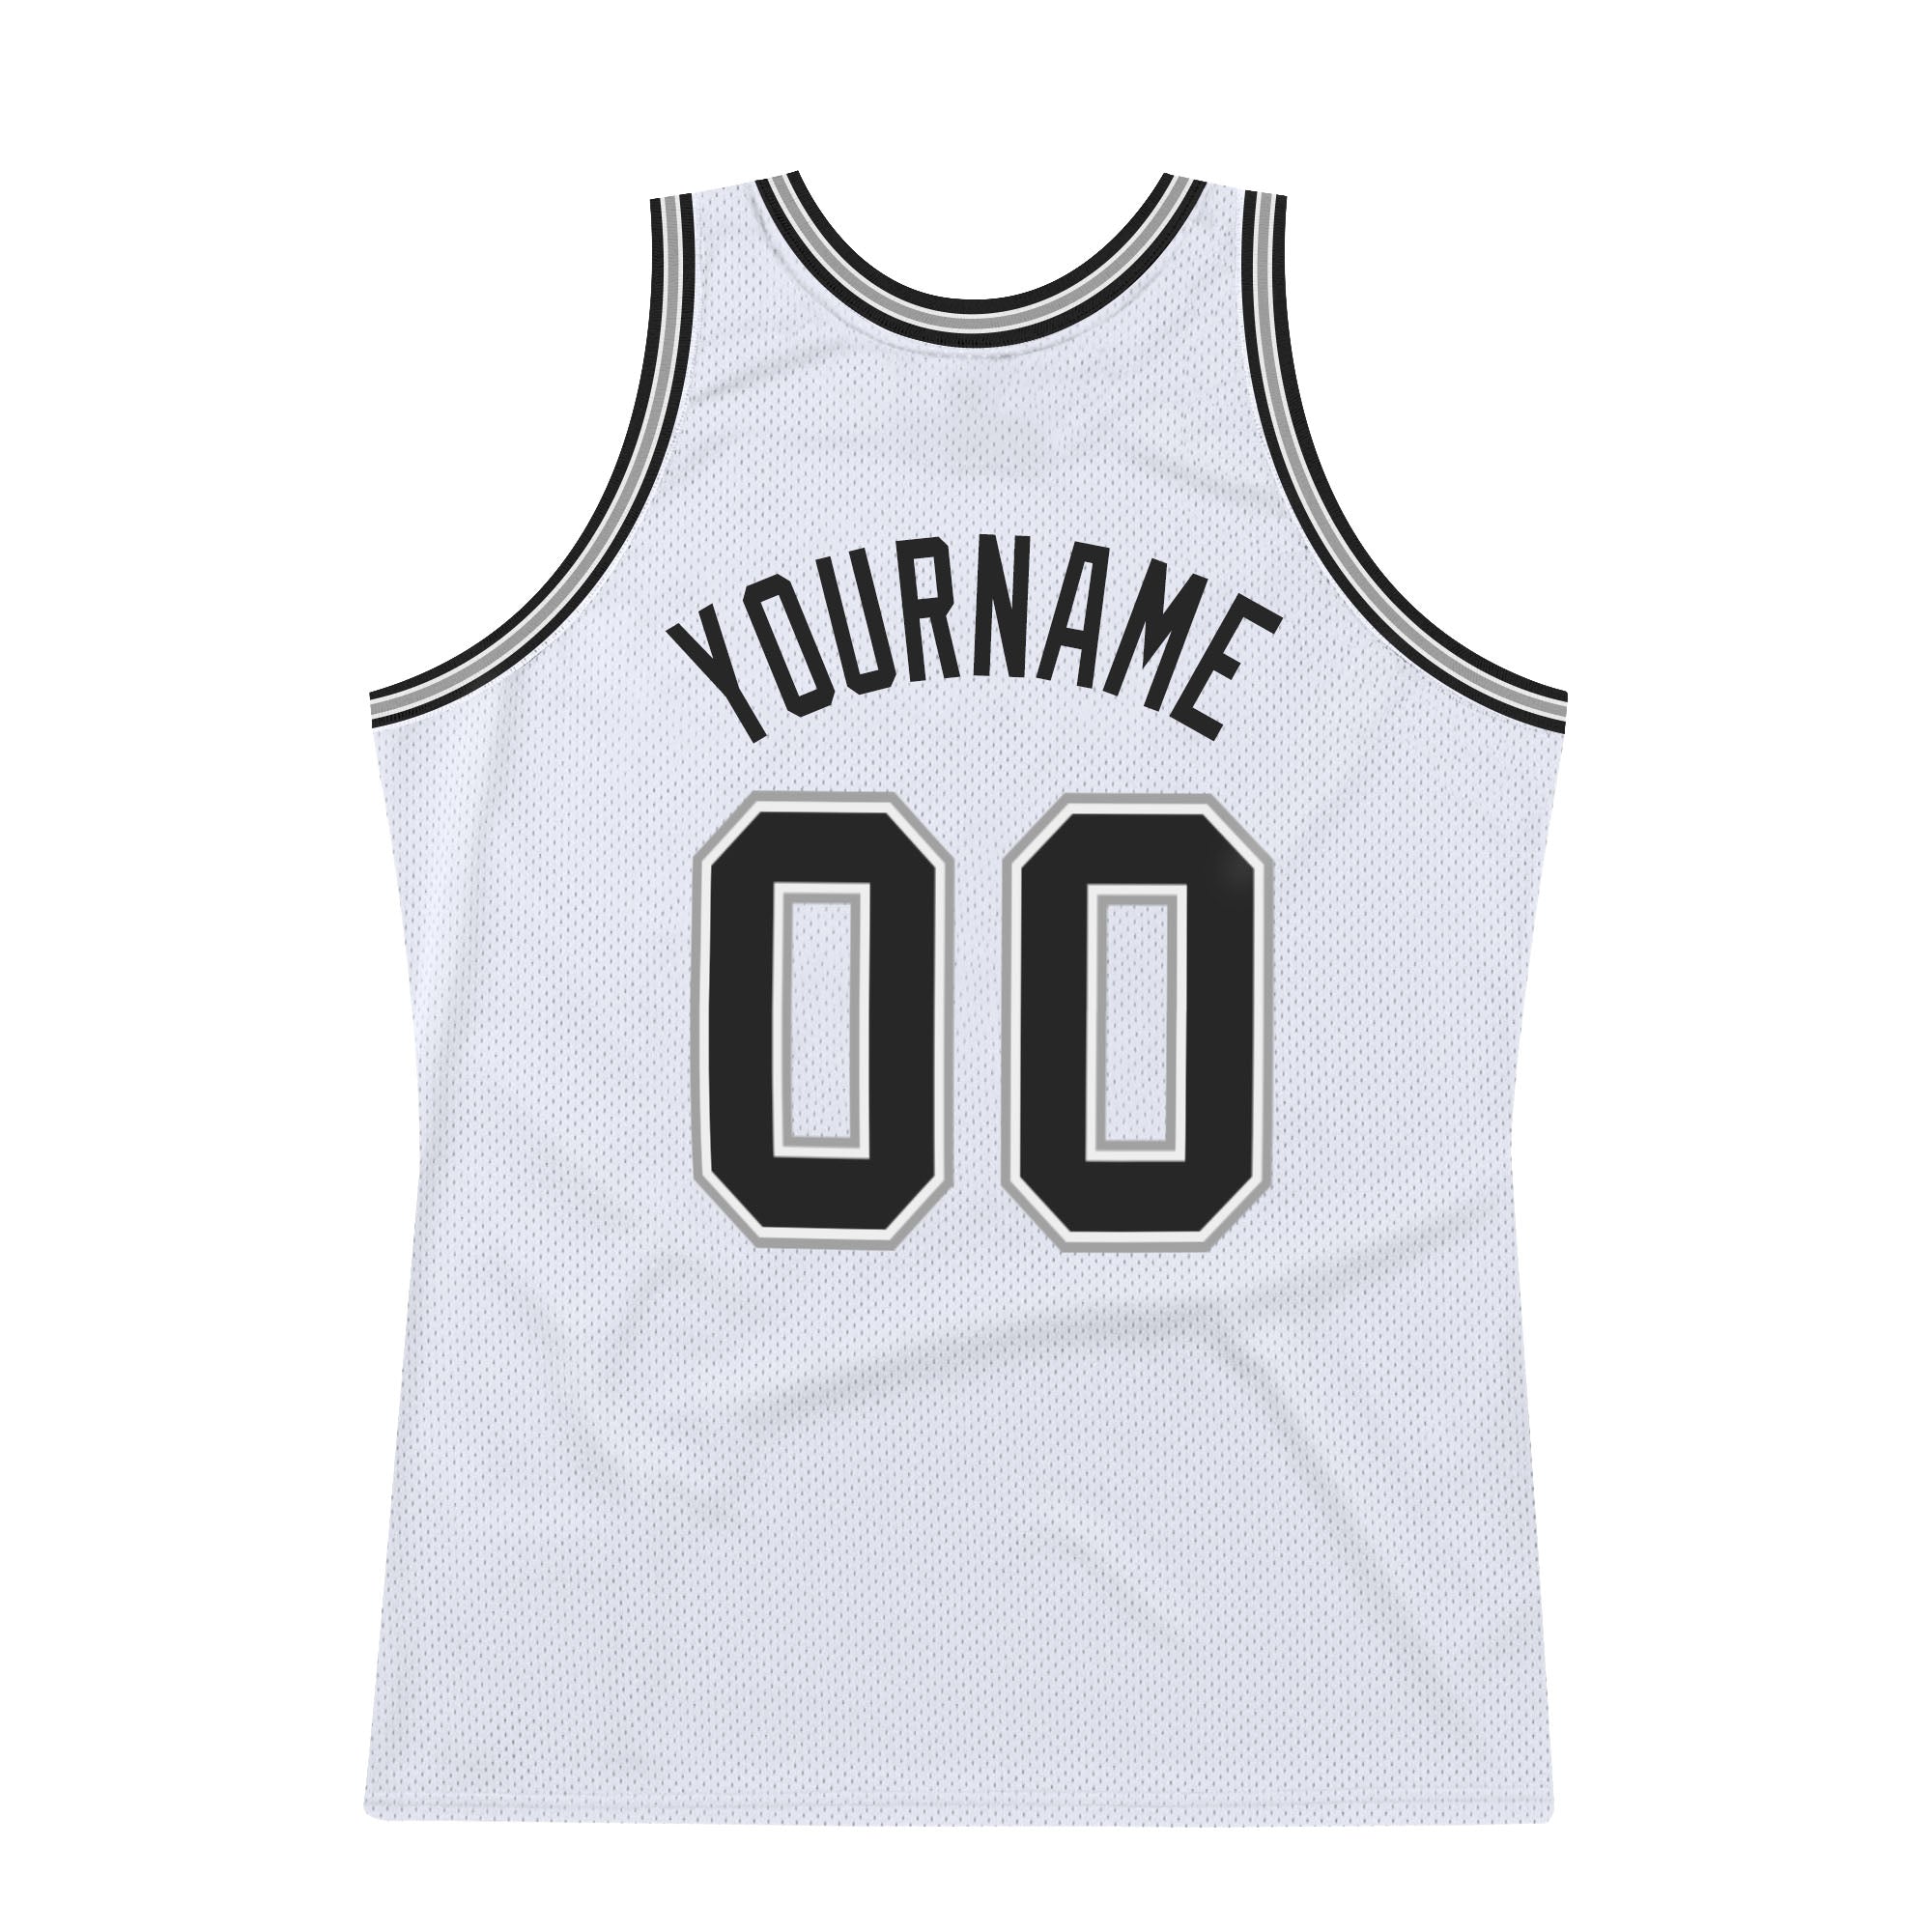 Custom White Black-Gray Authentic Throwback Basketball Jersey